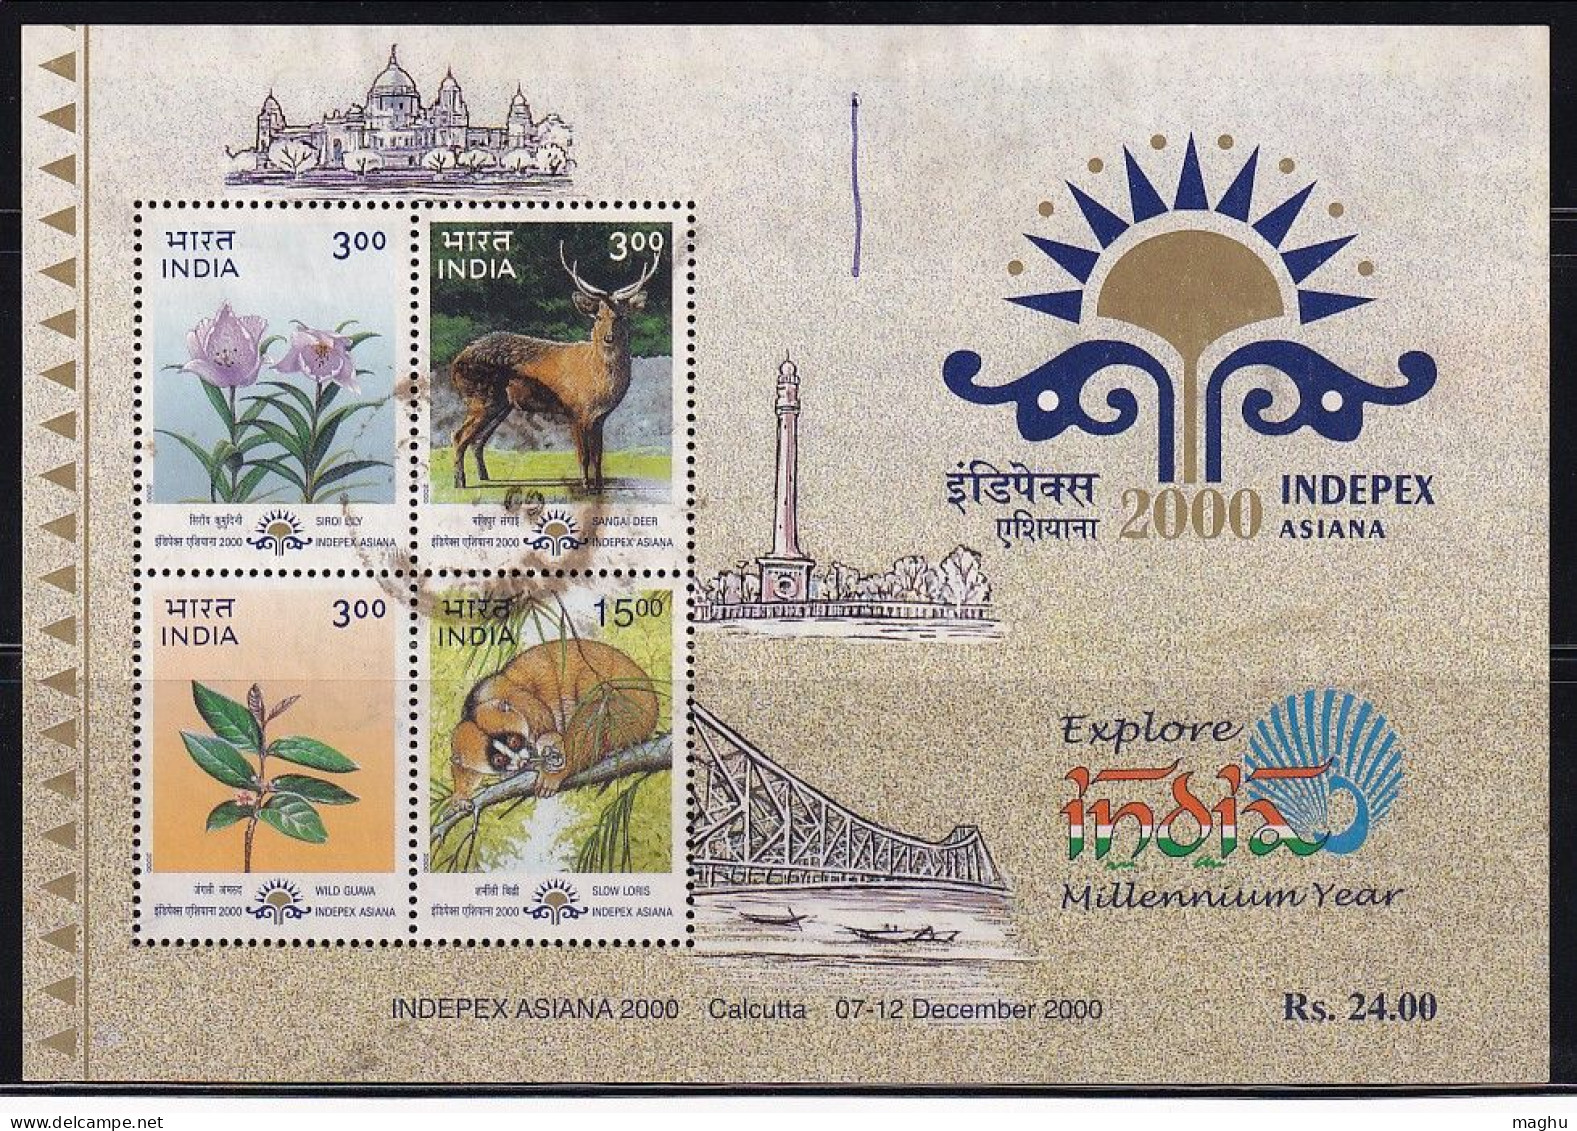 Postal Used India Miniature 2000, INDEPEX ASIANA, Lily Flower, Deer, Guave, Snow Loris, Animal, Bridge, Millenium - Gebraucht